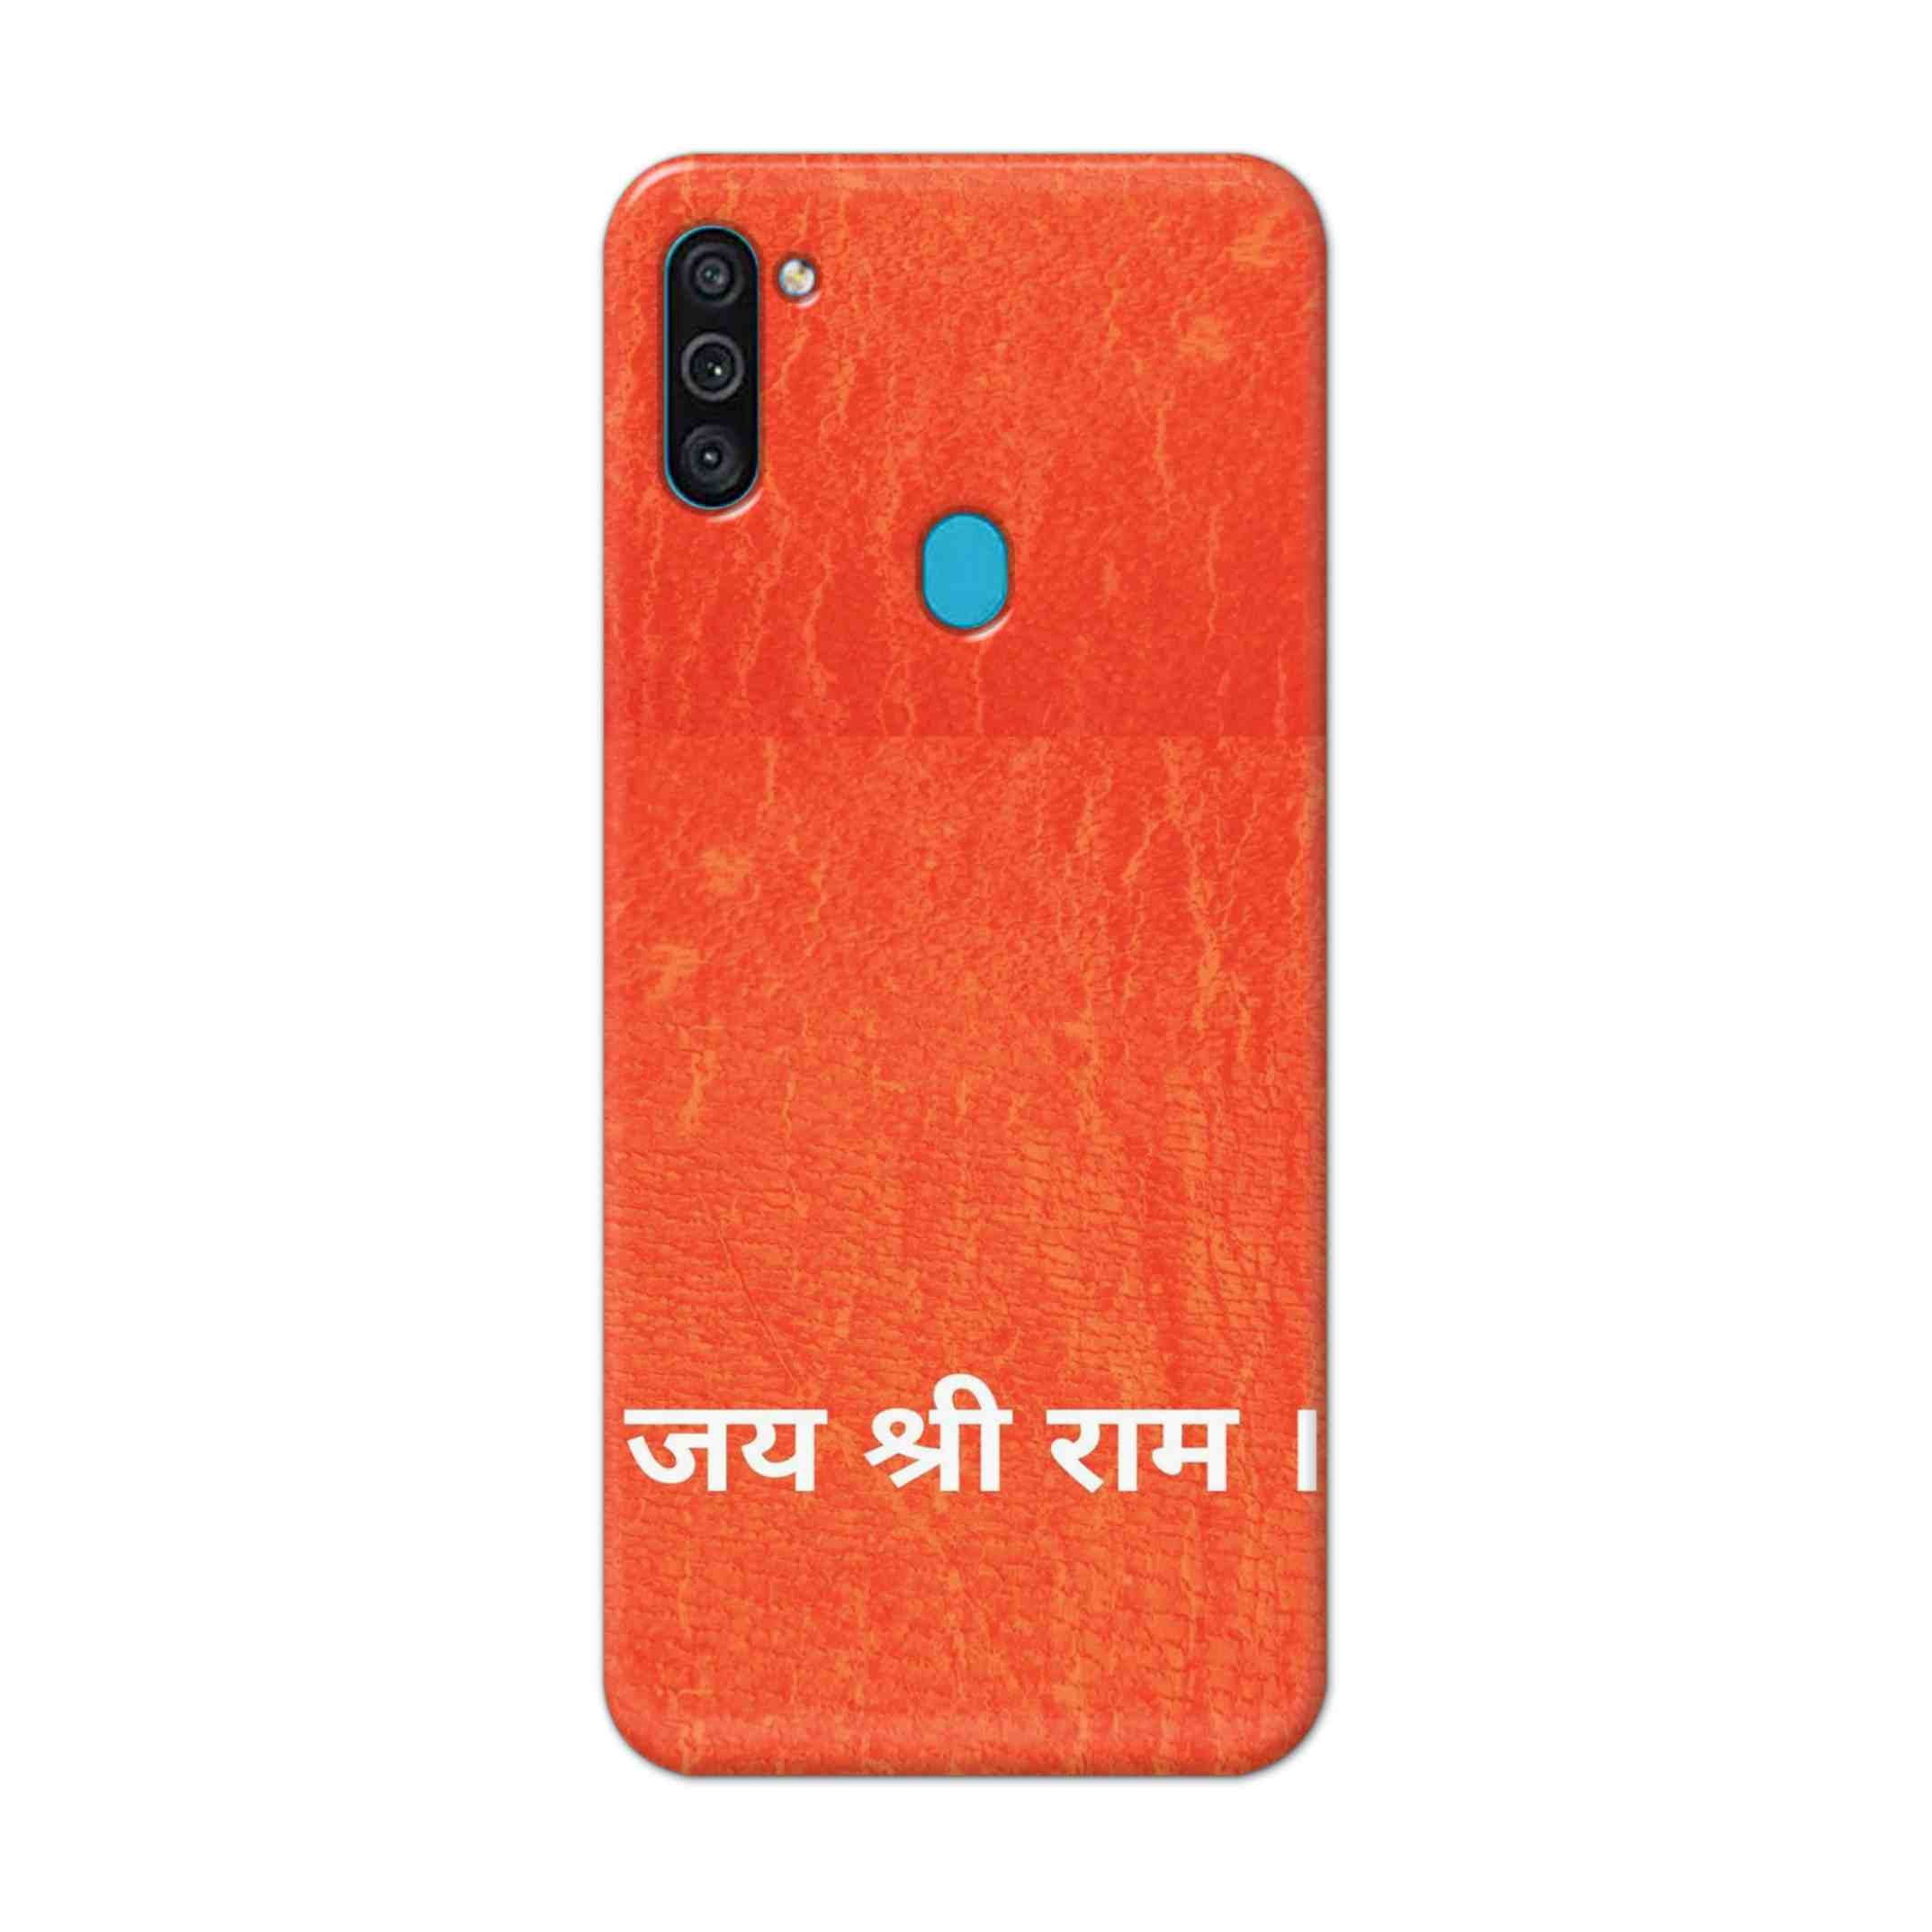 Buy Jai Shree Ram Hard Back Mobile Phone Case Cover For Samsung Galaxy M11 Online